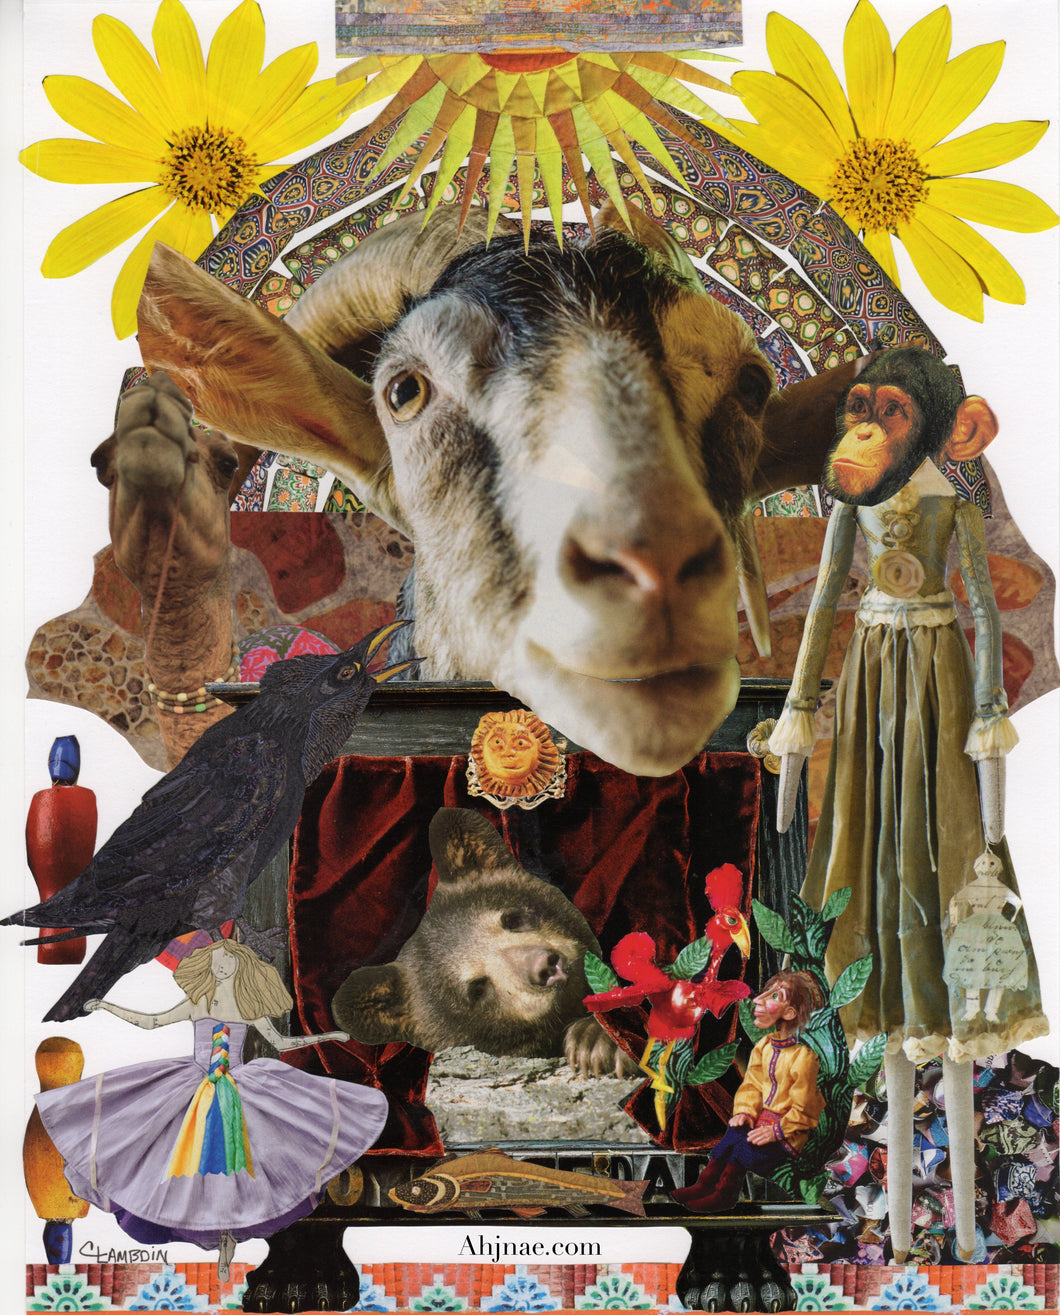 Hans and His Friends Print.  Goat, monkey, birds, bear cub, ballerina, yellow daisies, sunshine.